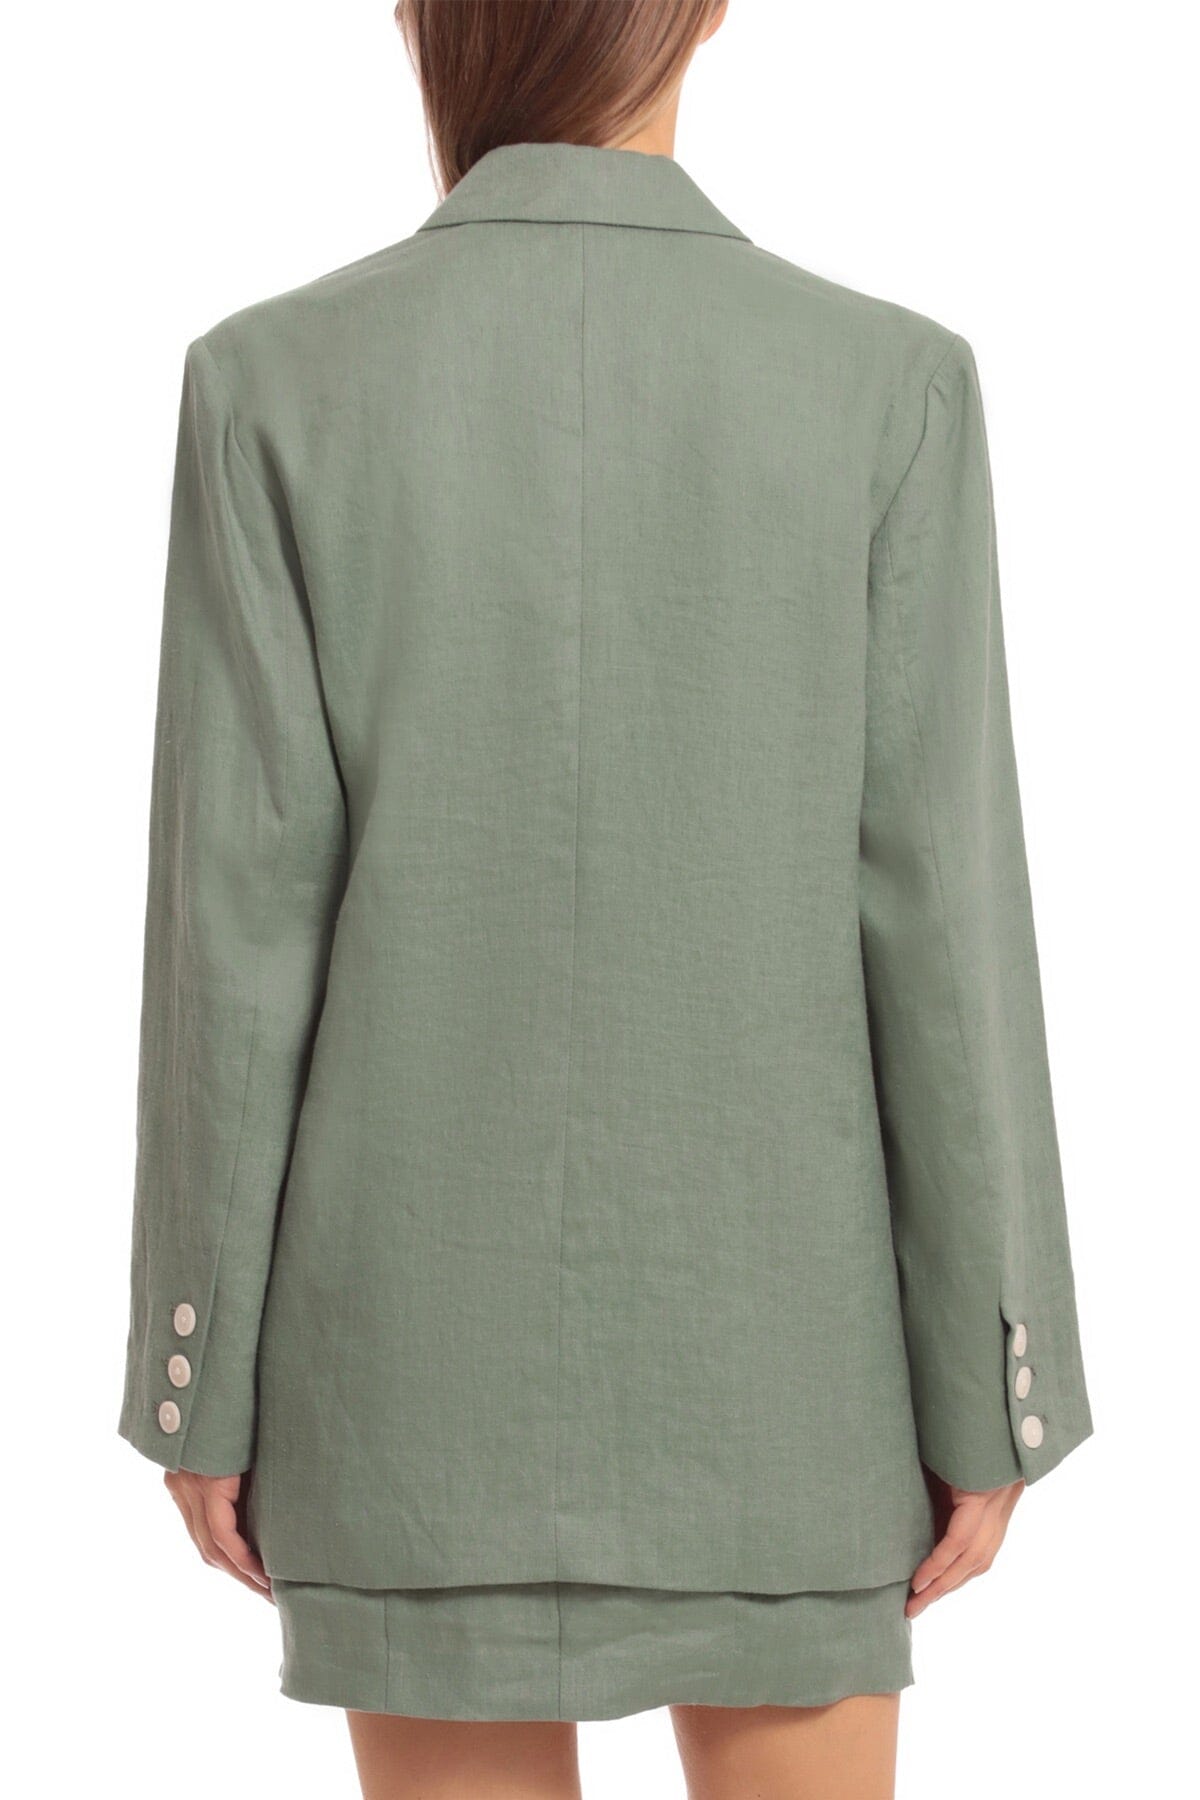 Linen Blend Boyfriend Blazer dusty sage hue green women's flattering designer jacket jackets